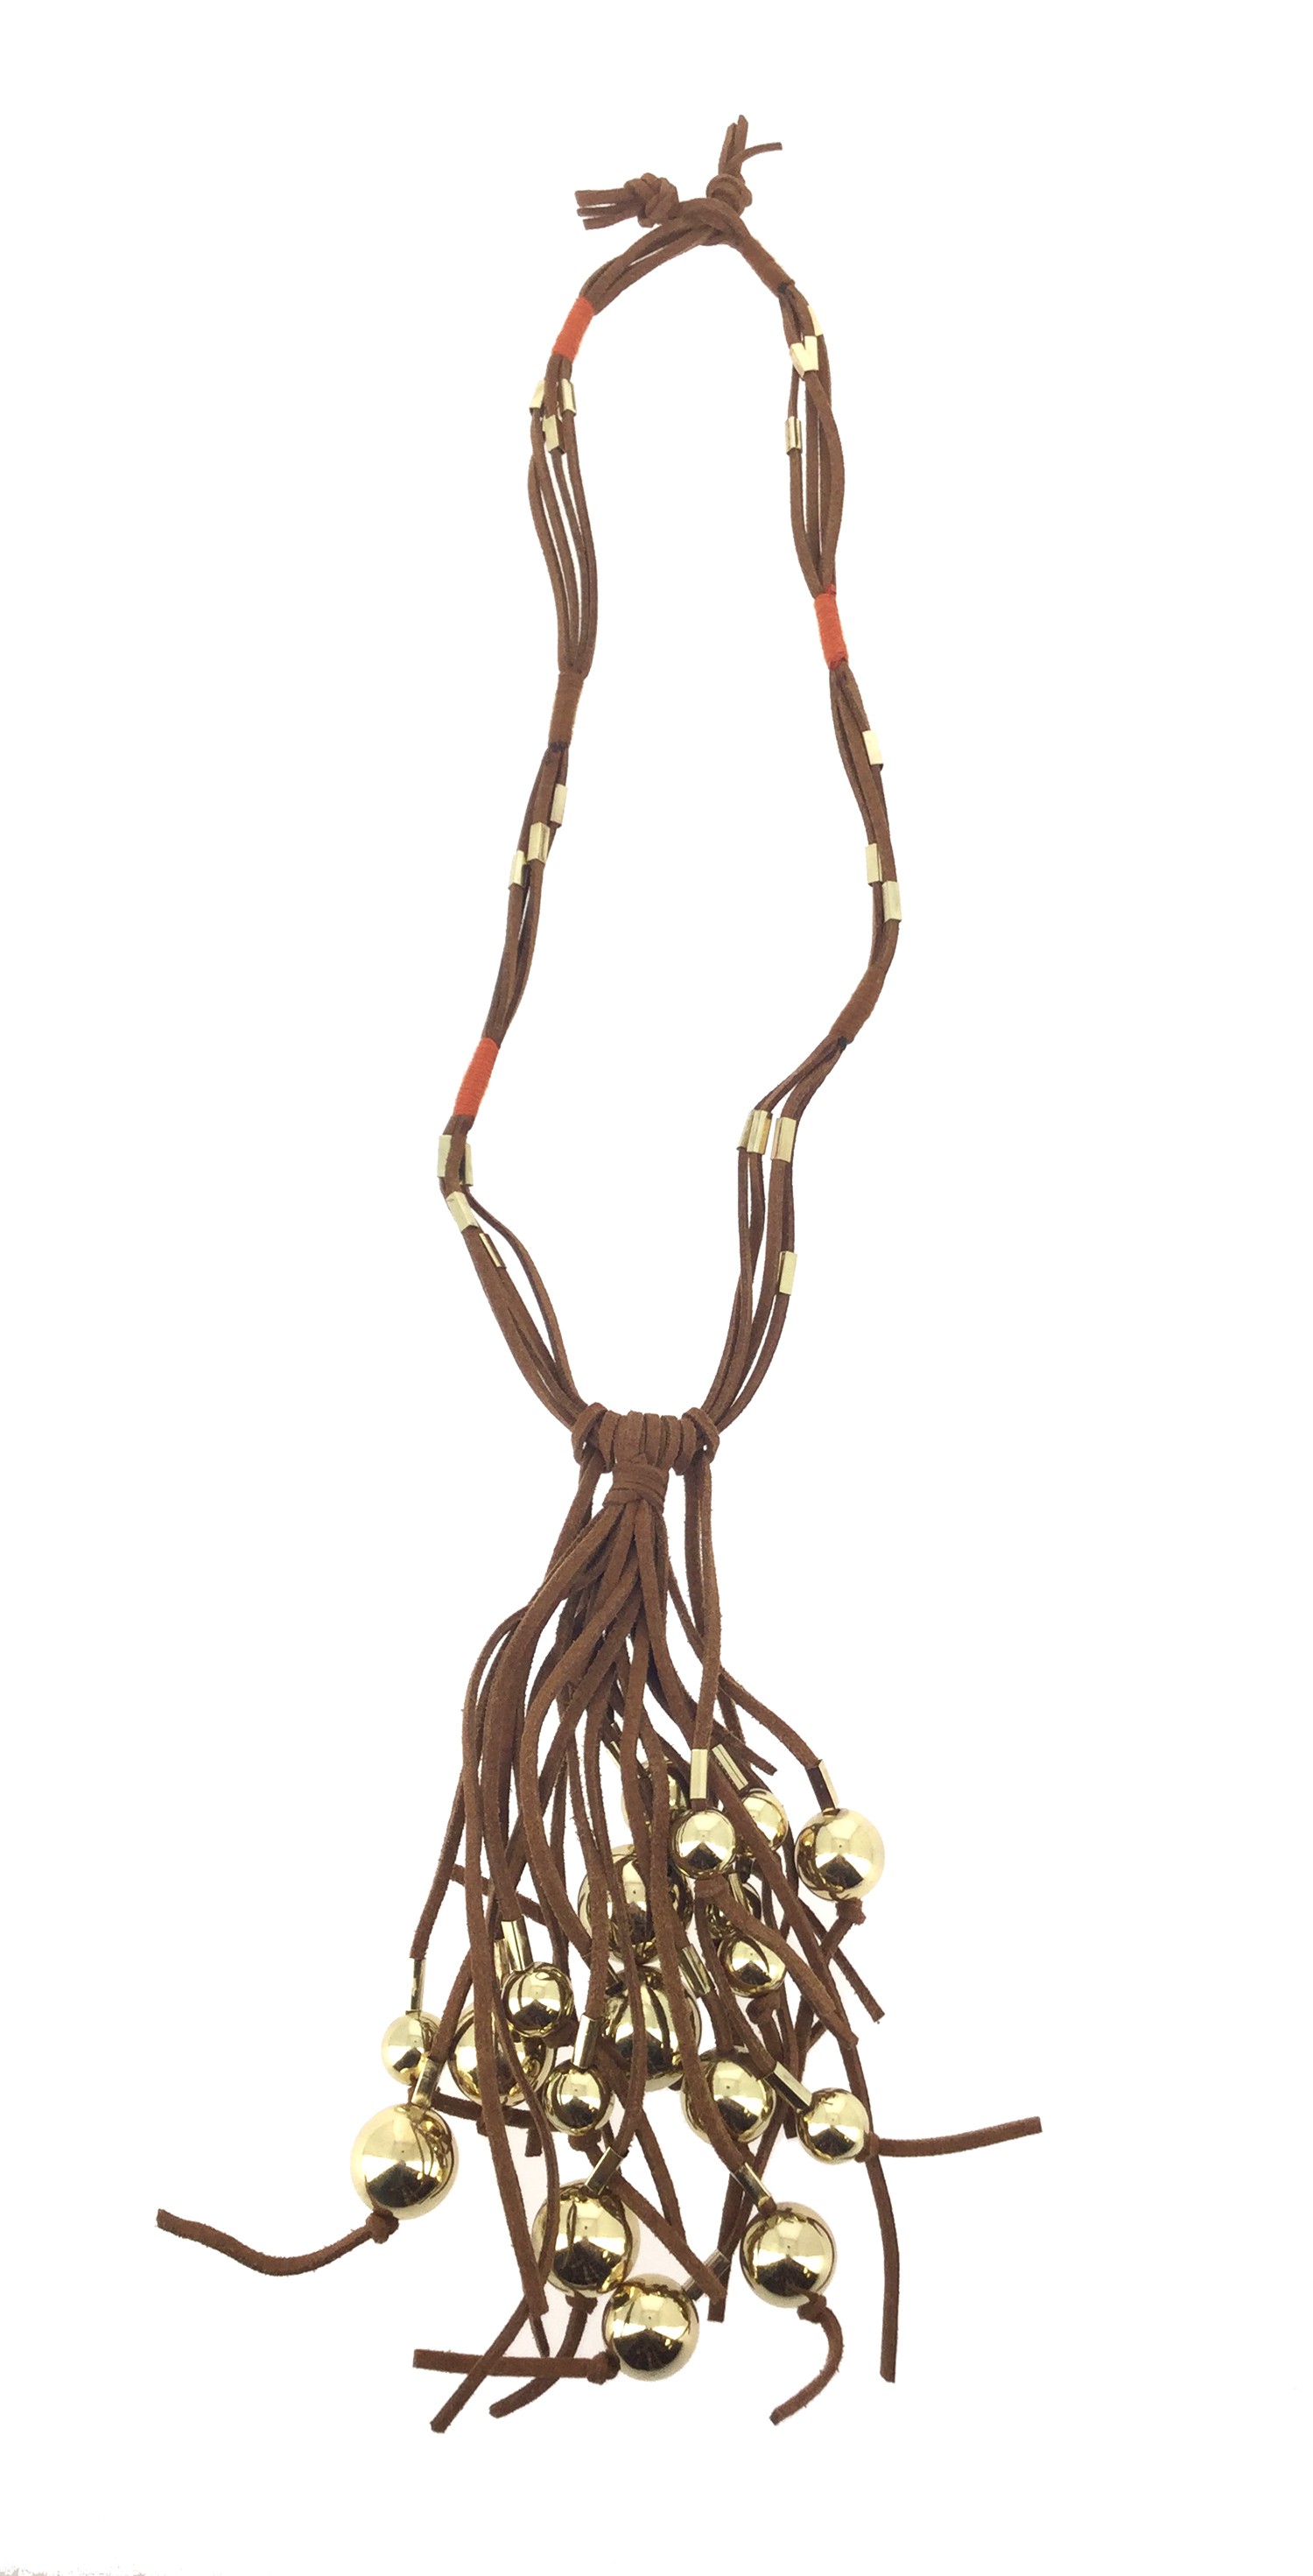 Collier Long - Multi rangs façon cuir avec grosses perles en métal.